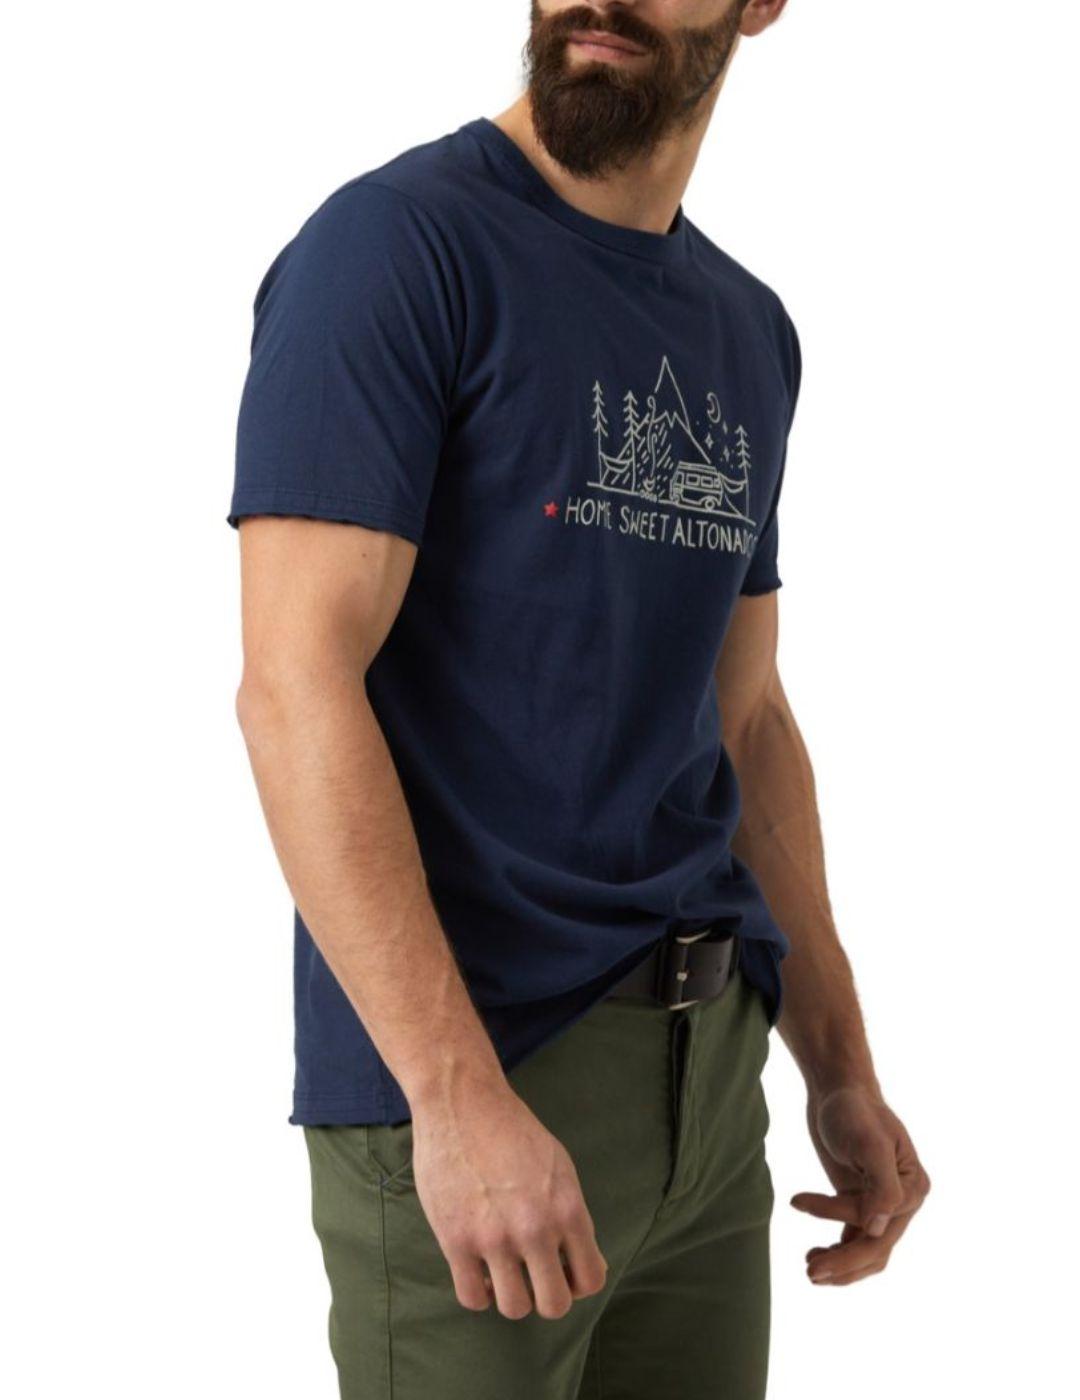 Camiseta Altonadock azul marino para hombre -b